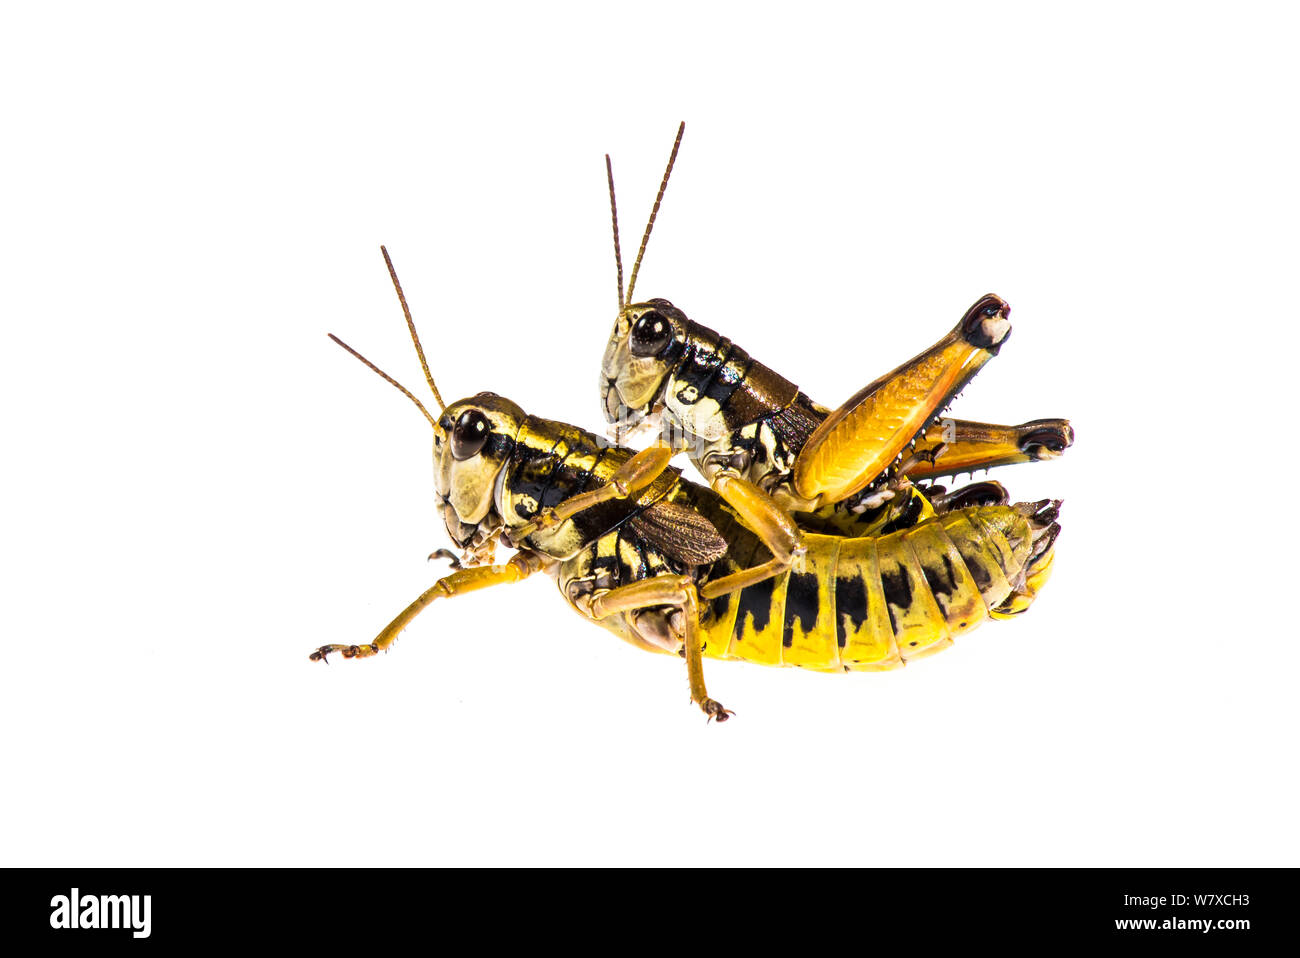 Short-horned grasshopper (Podisma pedestris) pair, Greolieres, France, August. Meetyourneighbours.net project. Stock Photo